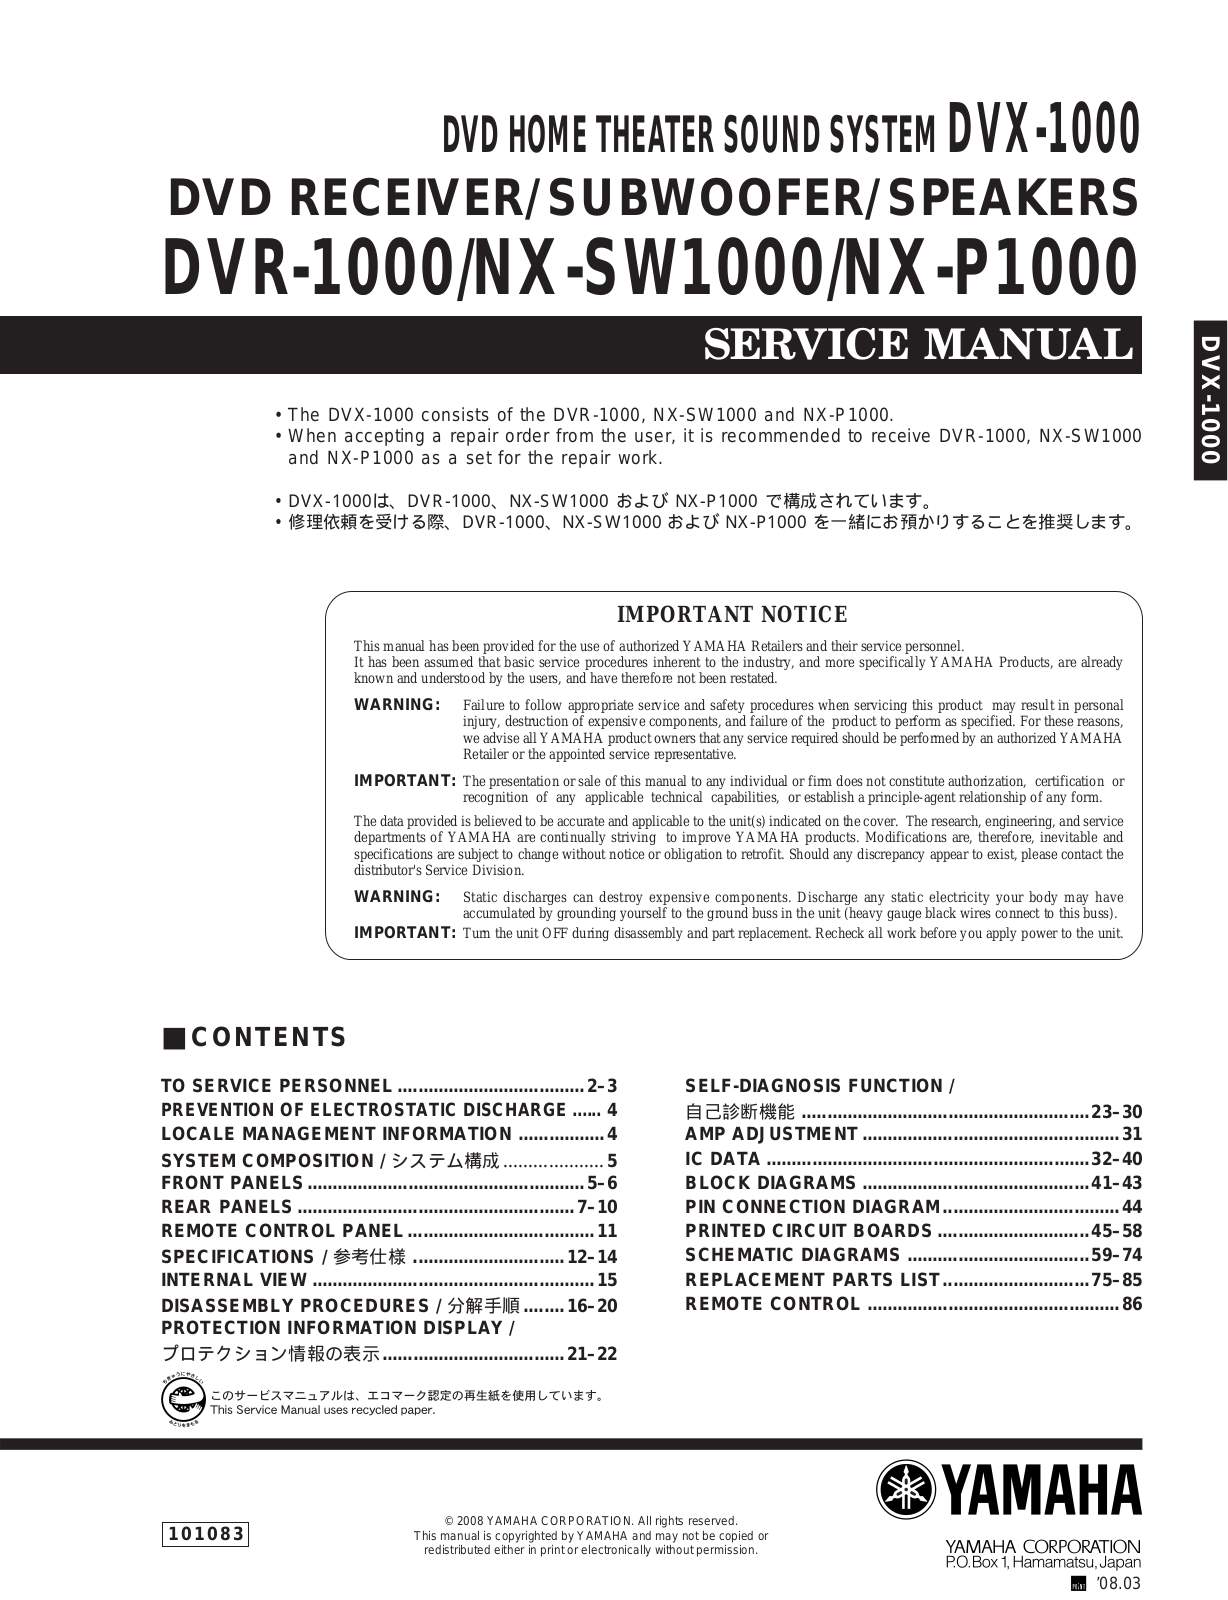 Yamaha DVR-1000, NX -P1000, NX -SW1000 User Manual